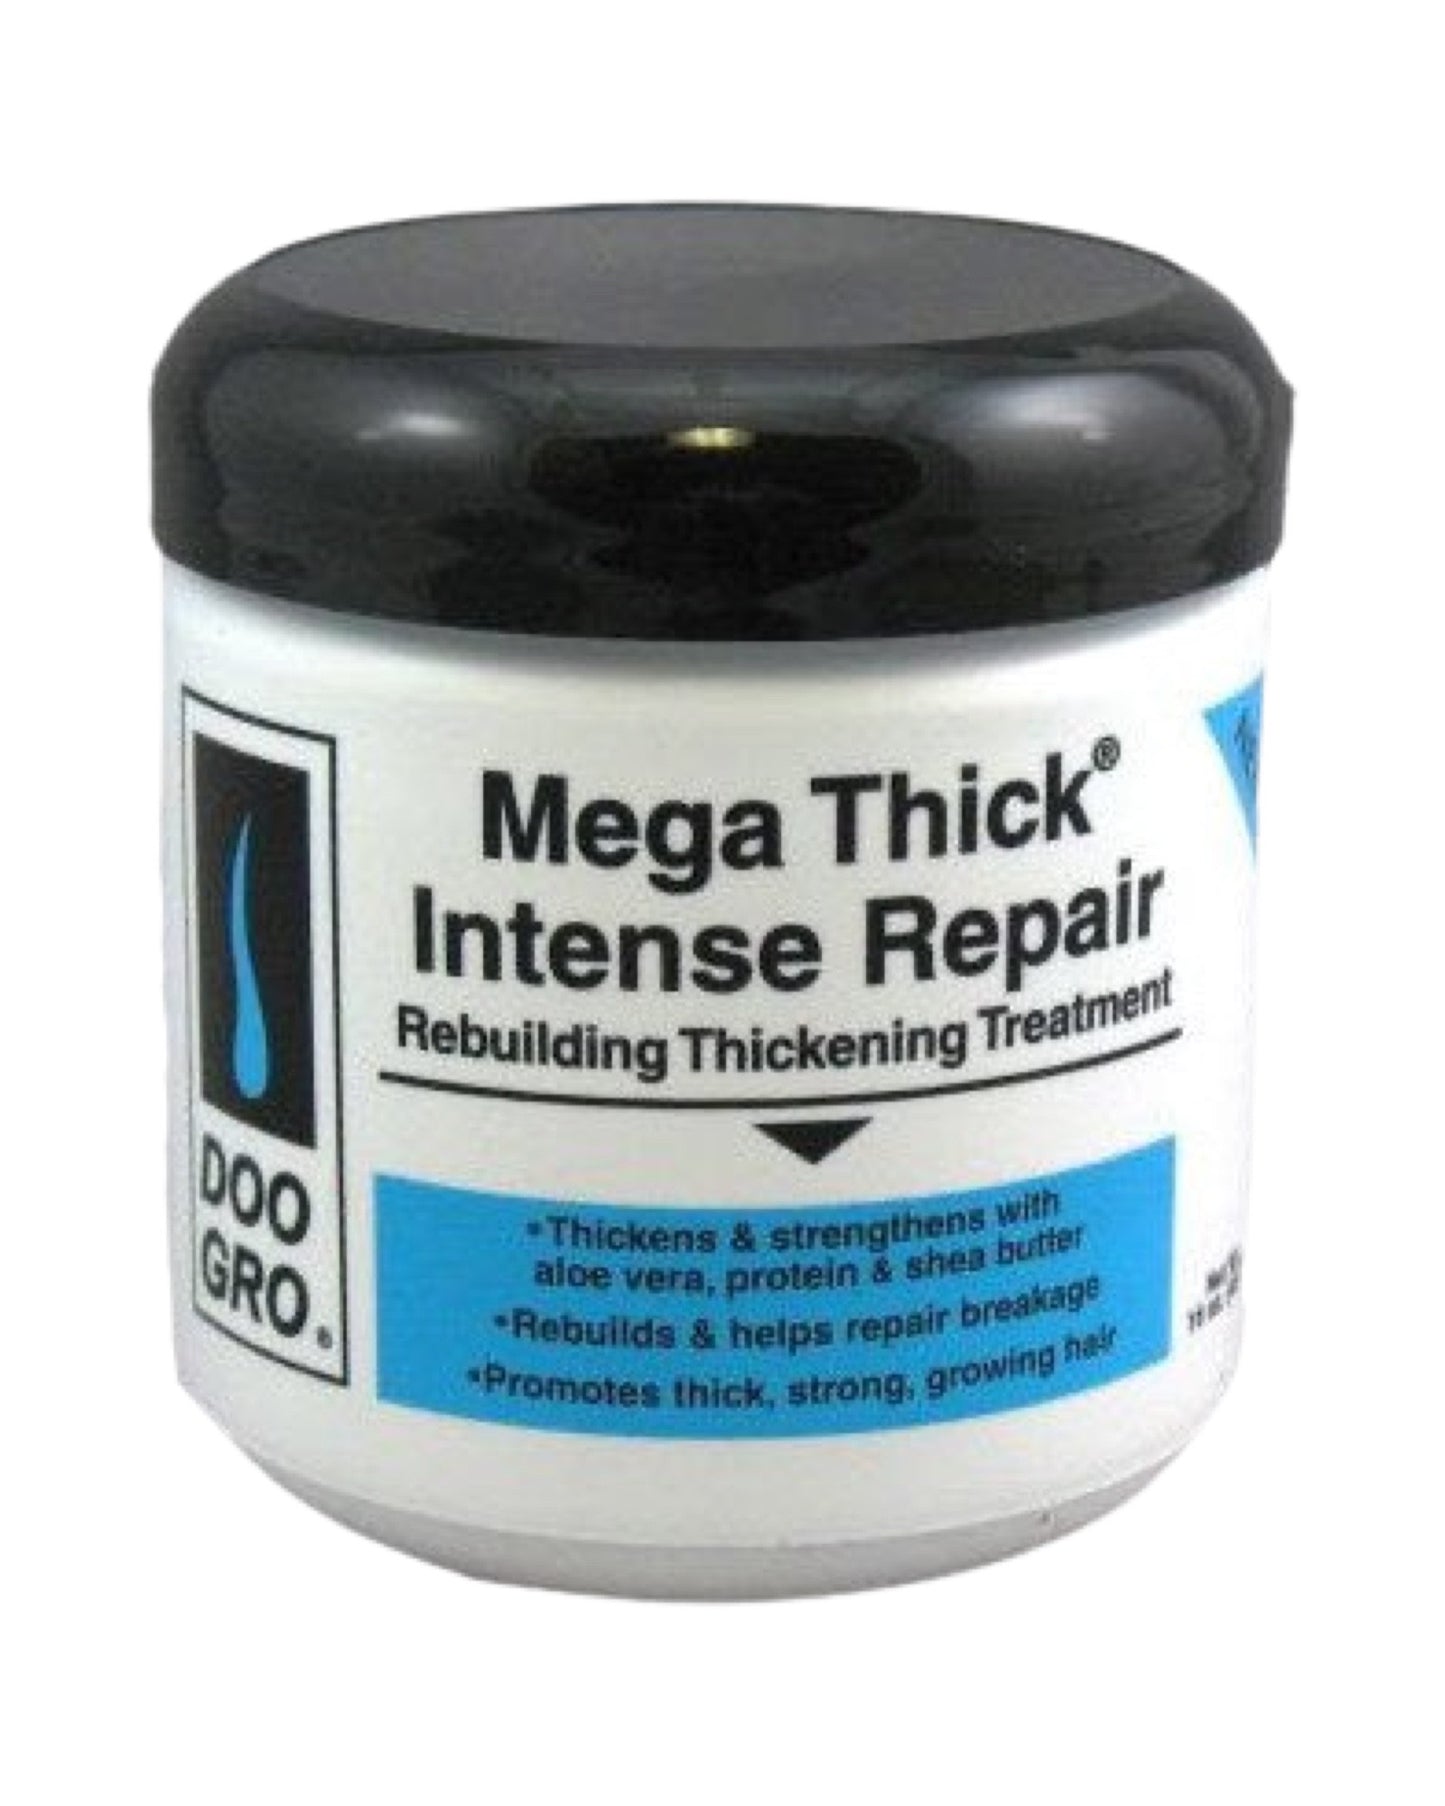 Doo Gro Mega Thick Intense Repair Rebuilding Thickening Treatment 454G